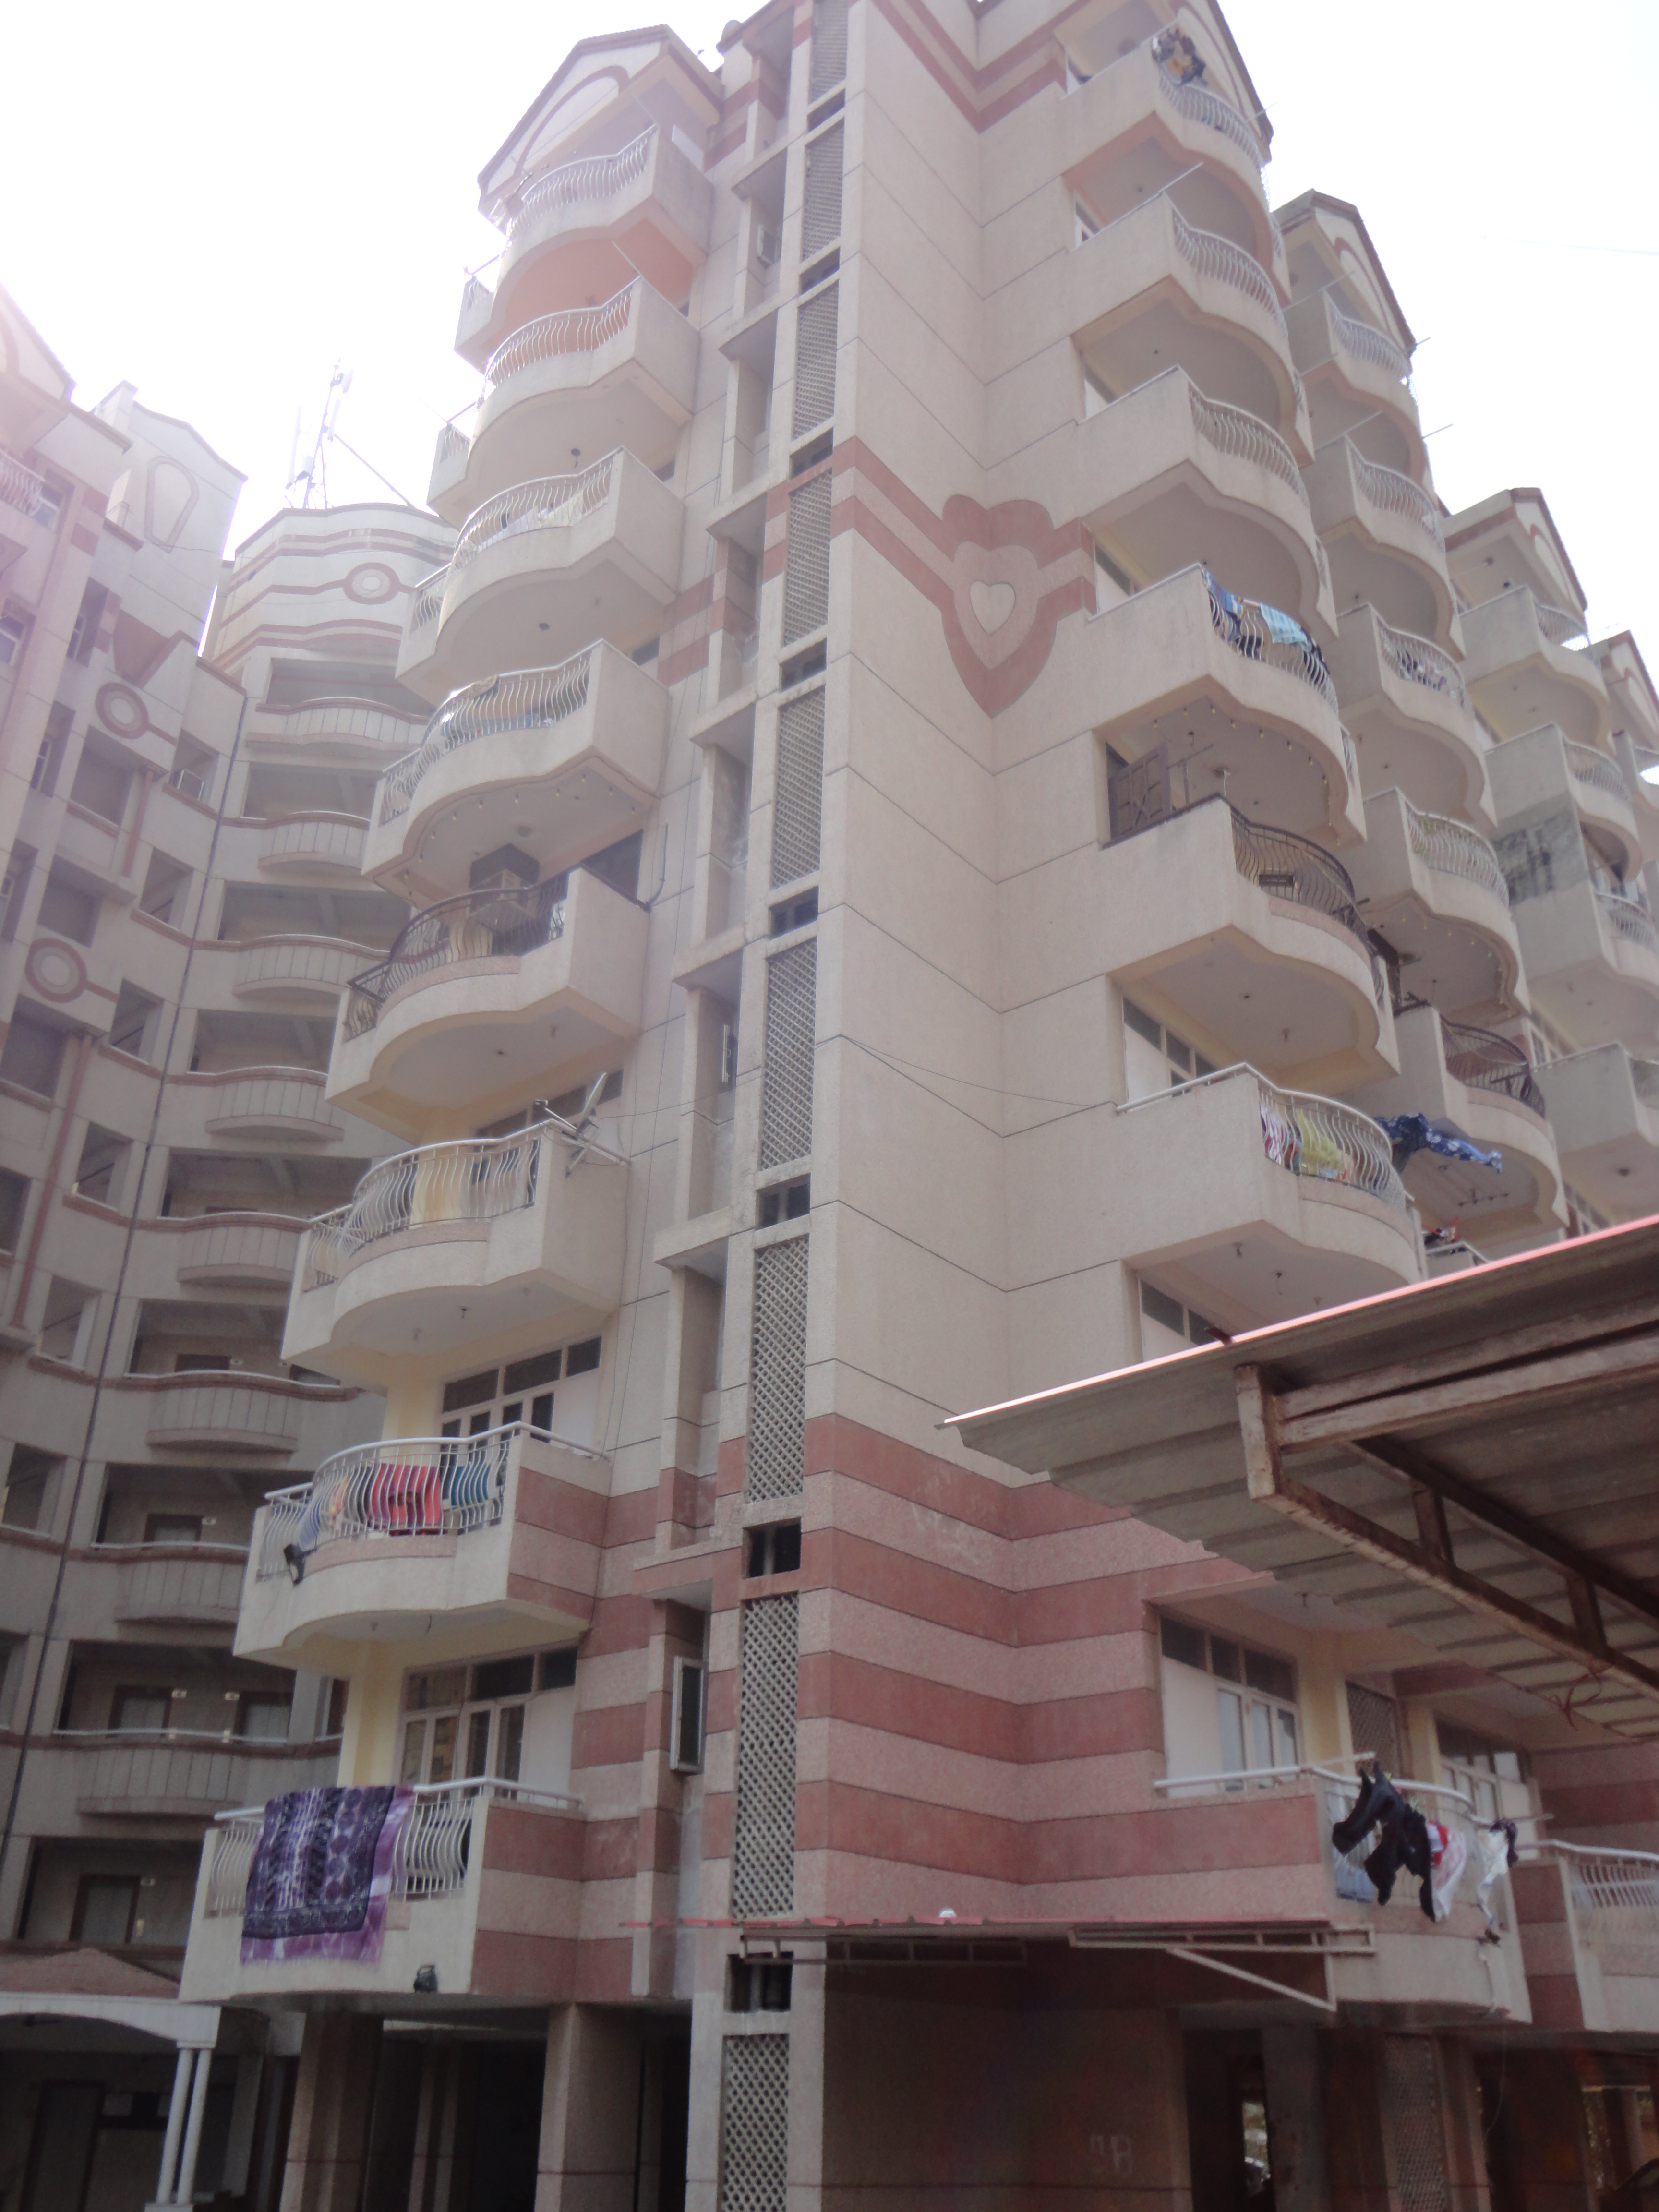 Ashoka Apartments CGHS Brochure Pdf Image